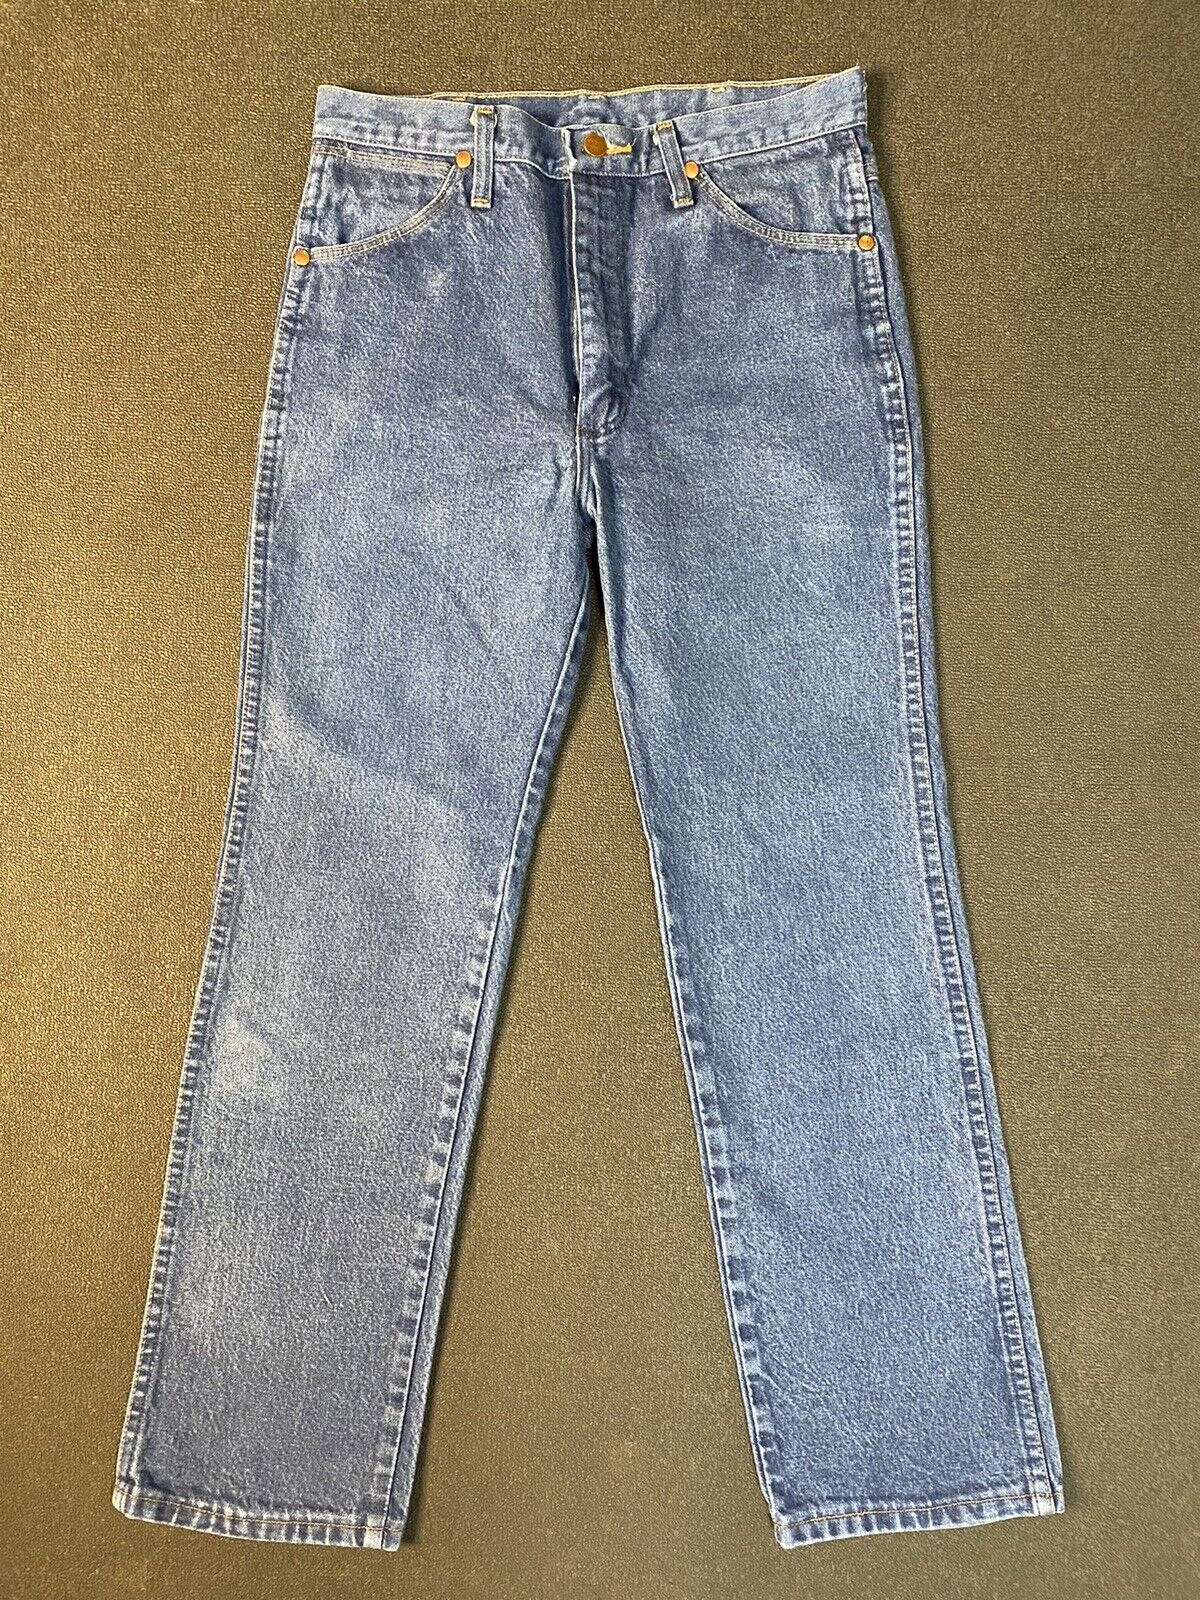 Wrangler Jeans 936DEN Size 31x30 (29.5x28) Blue Strai… - Gem